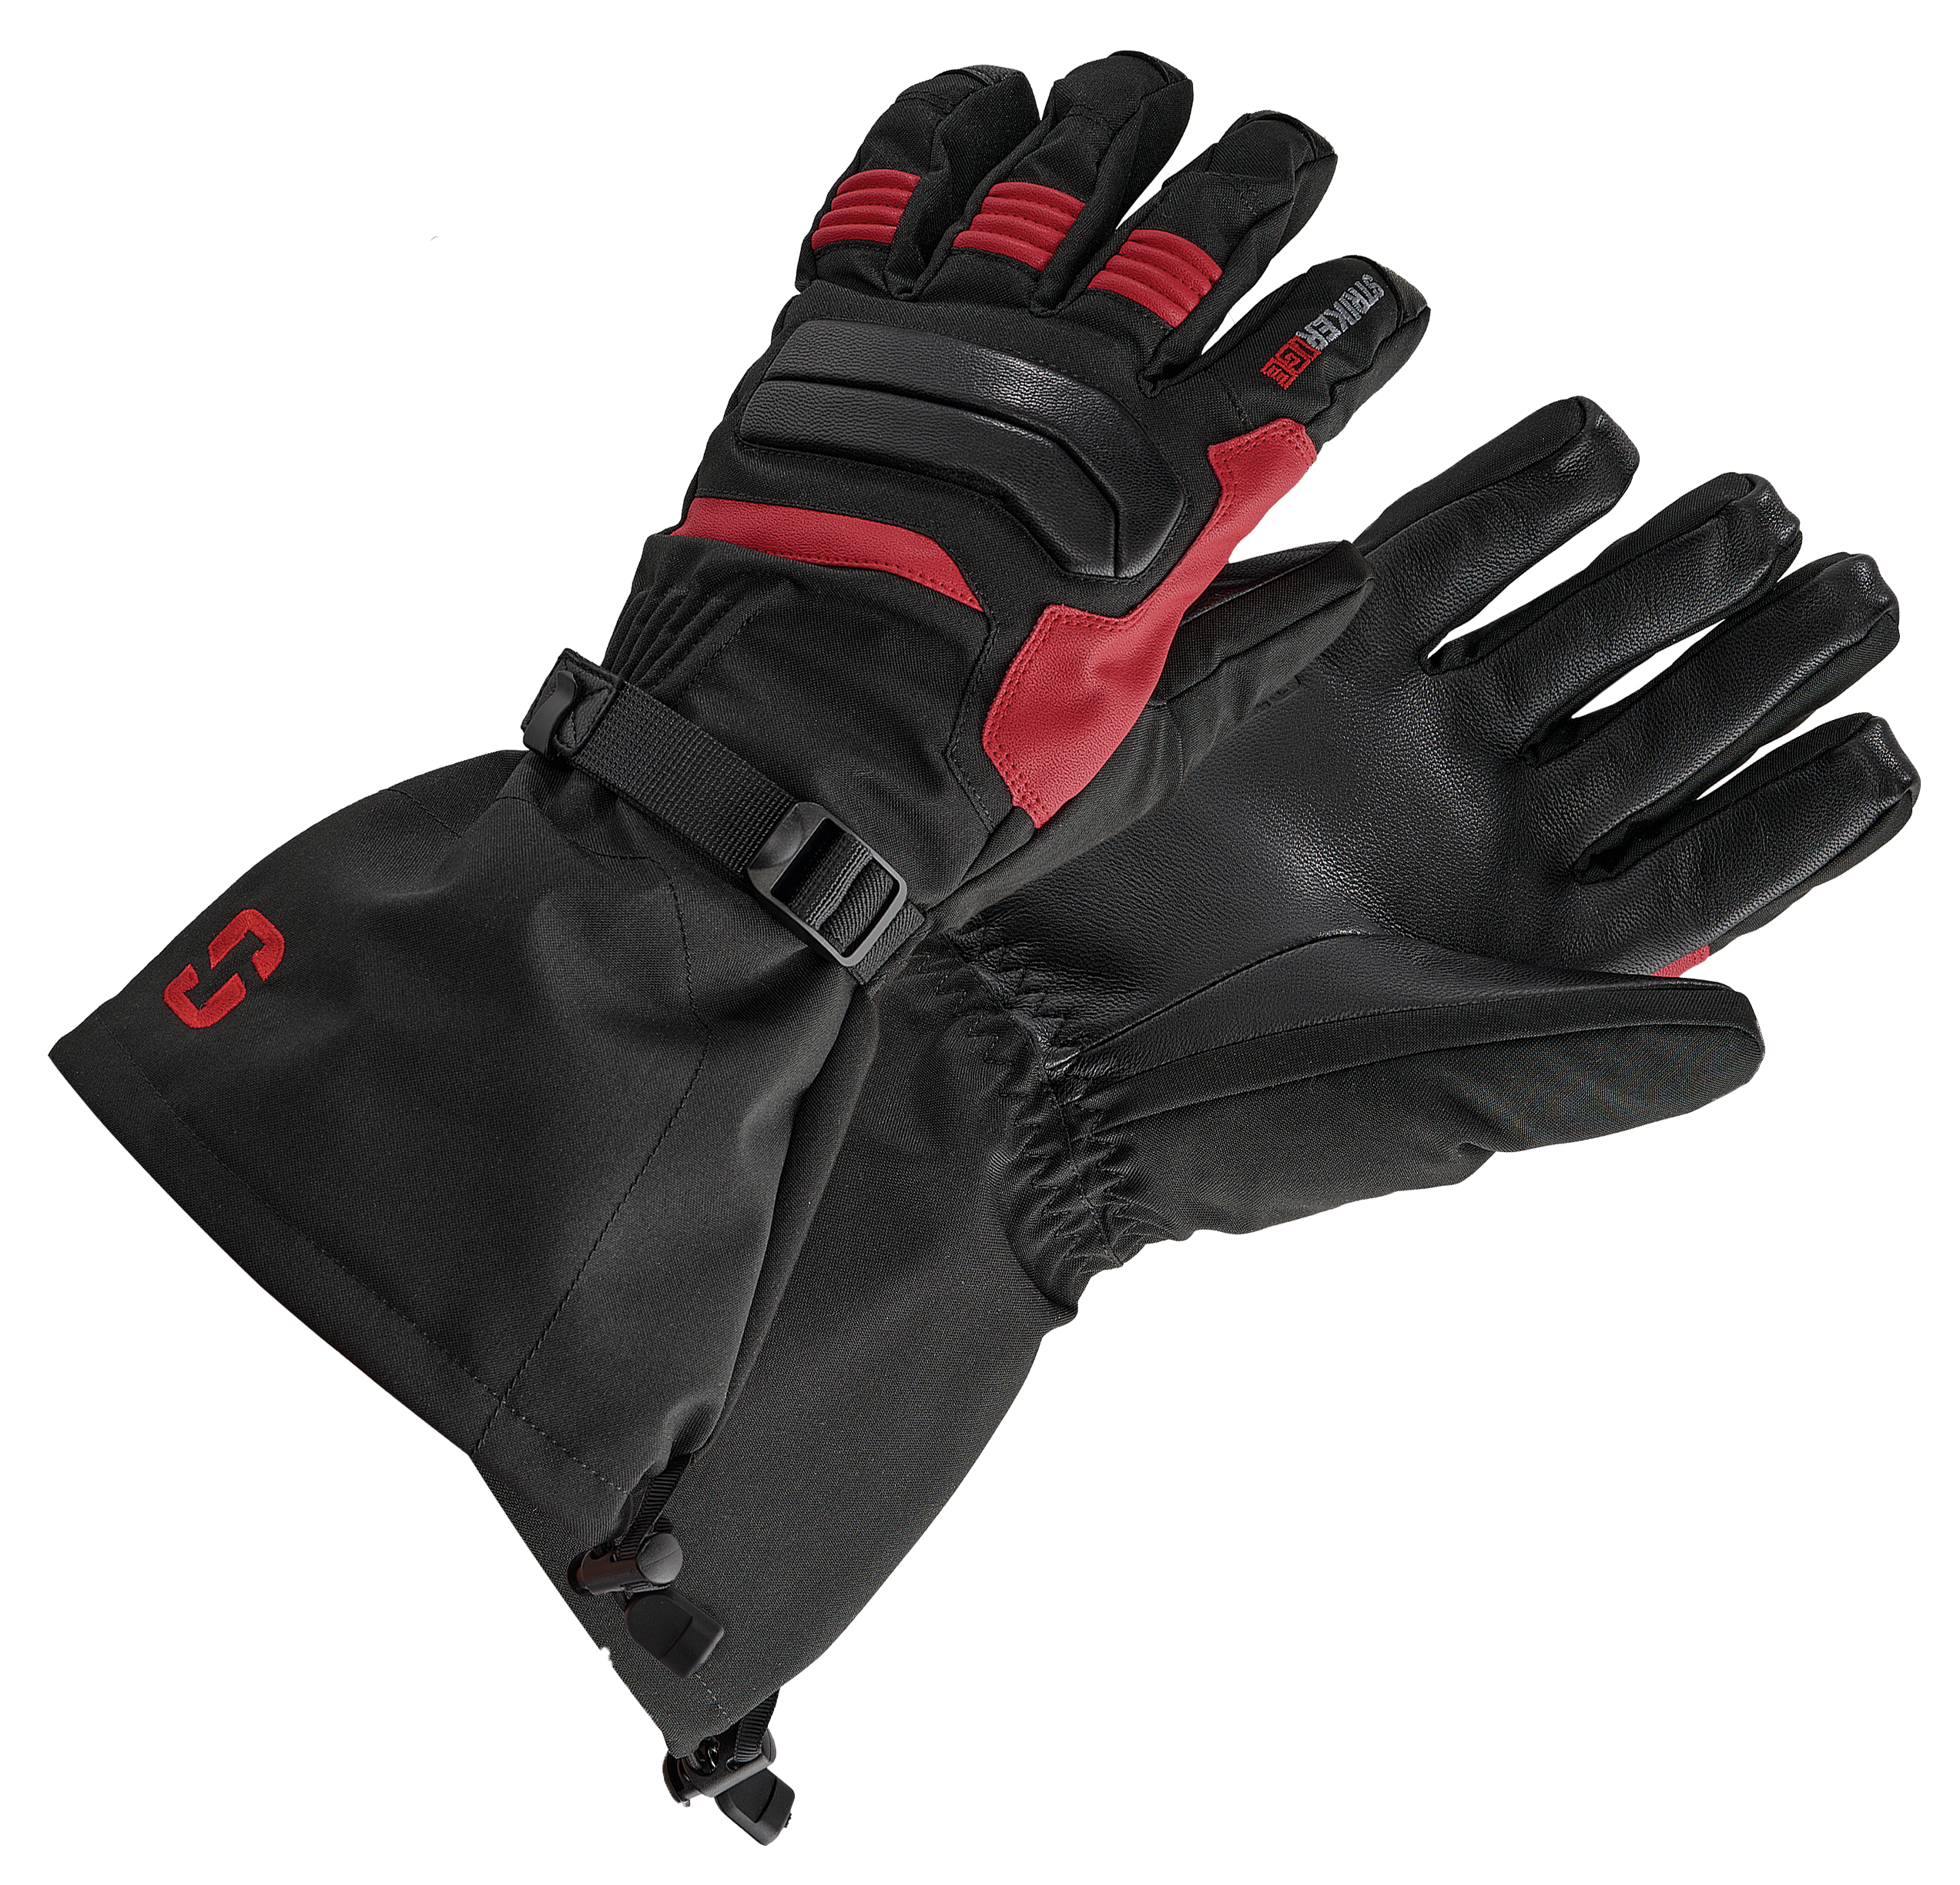 StrikerICE Defender Gloves for Men